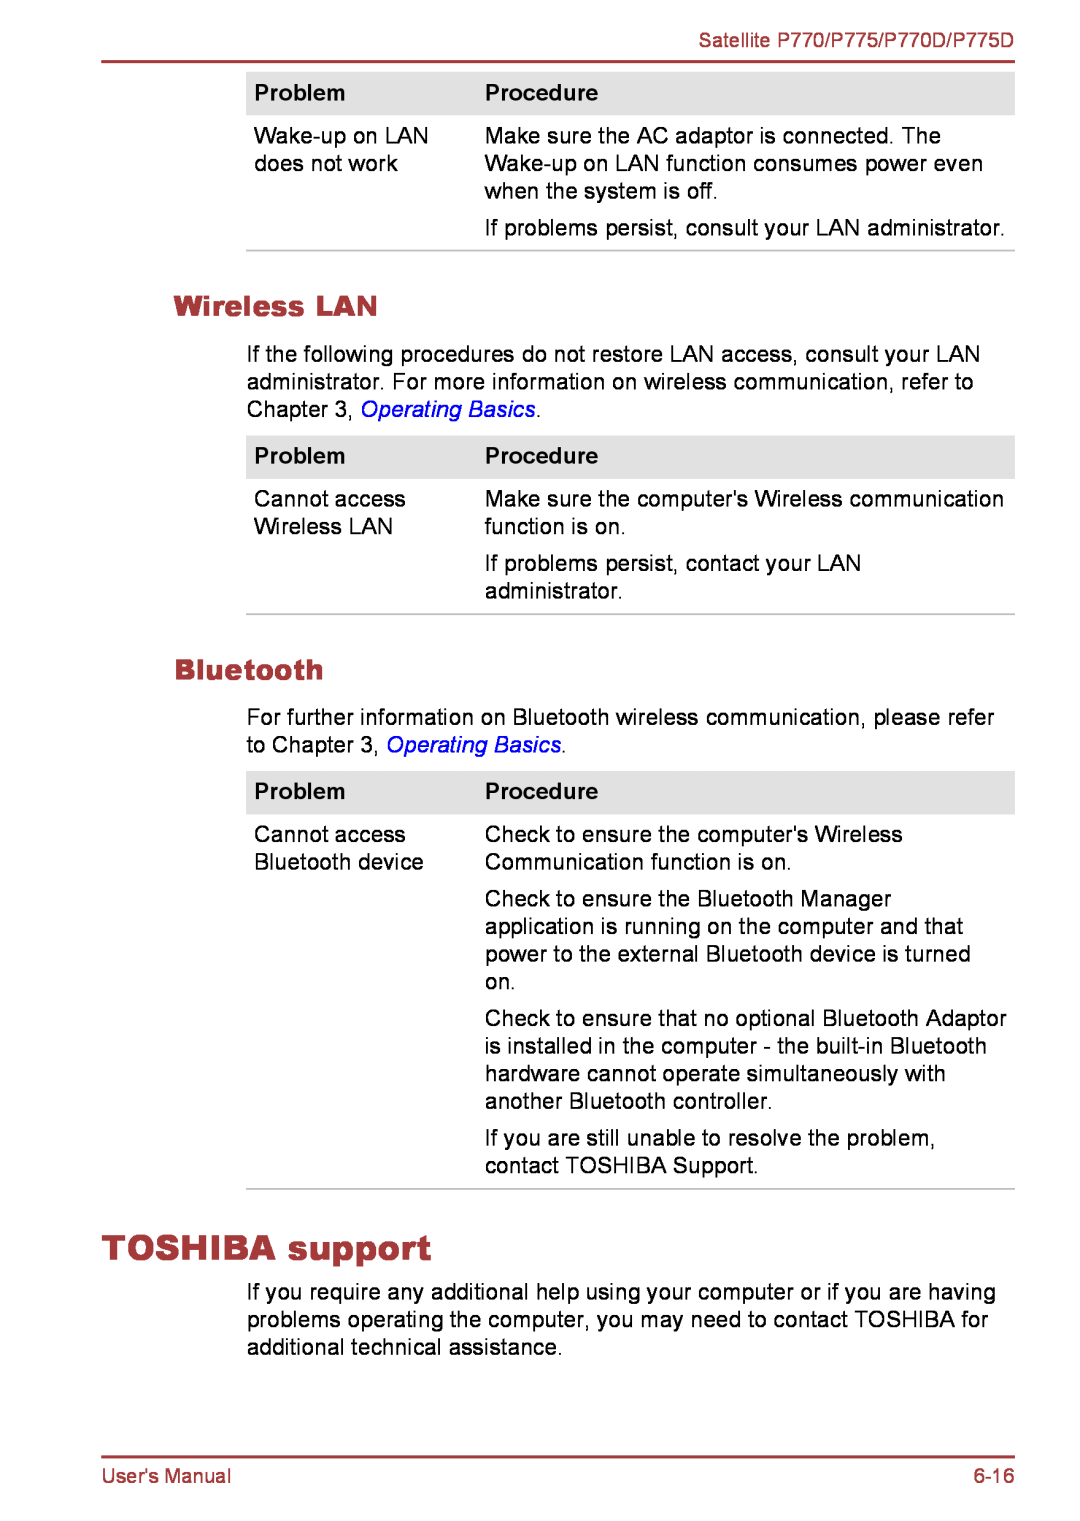 Toshiba P770 user manual TOSHIBA support, Bluetooth, Wireless LAN, Problem, Procedure 